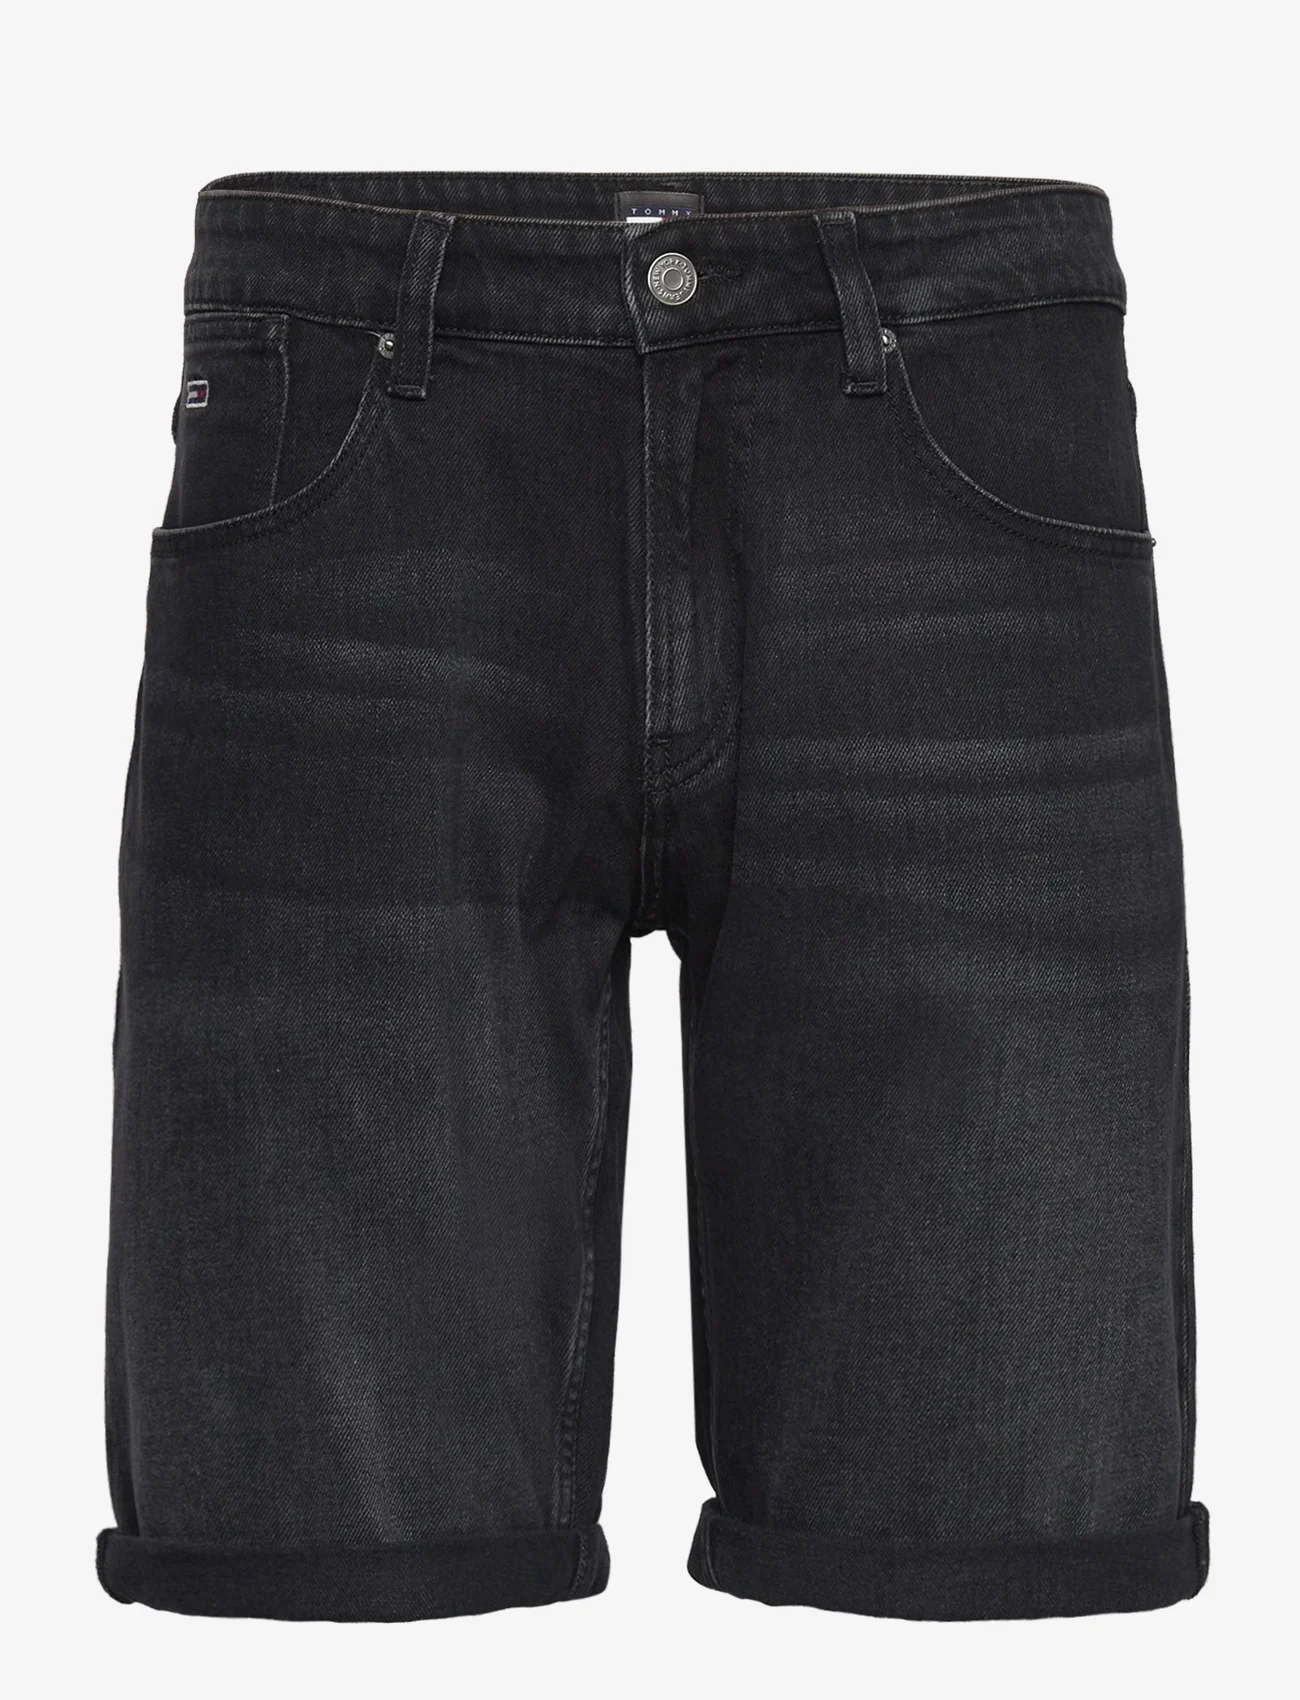 Tommy Jeans - RONNIE SHORT BH0188 - denim shorts - denim black - 0